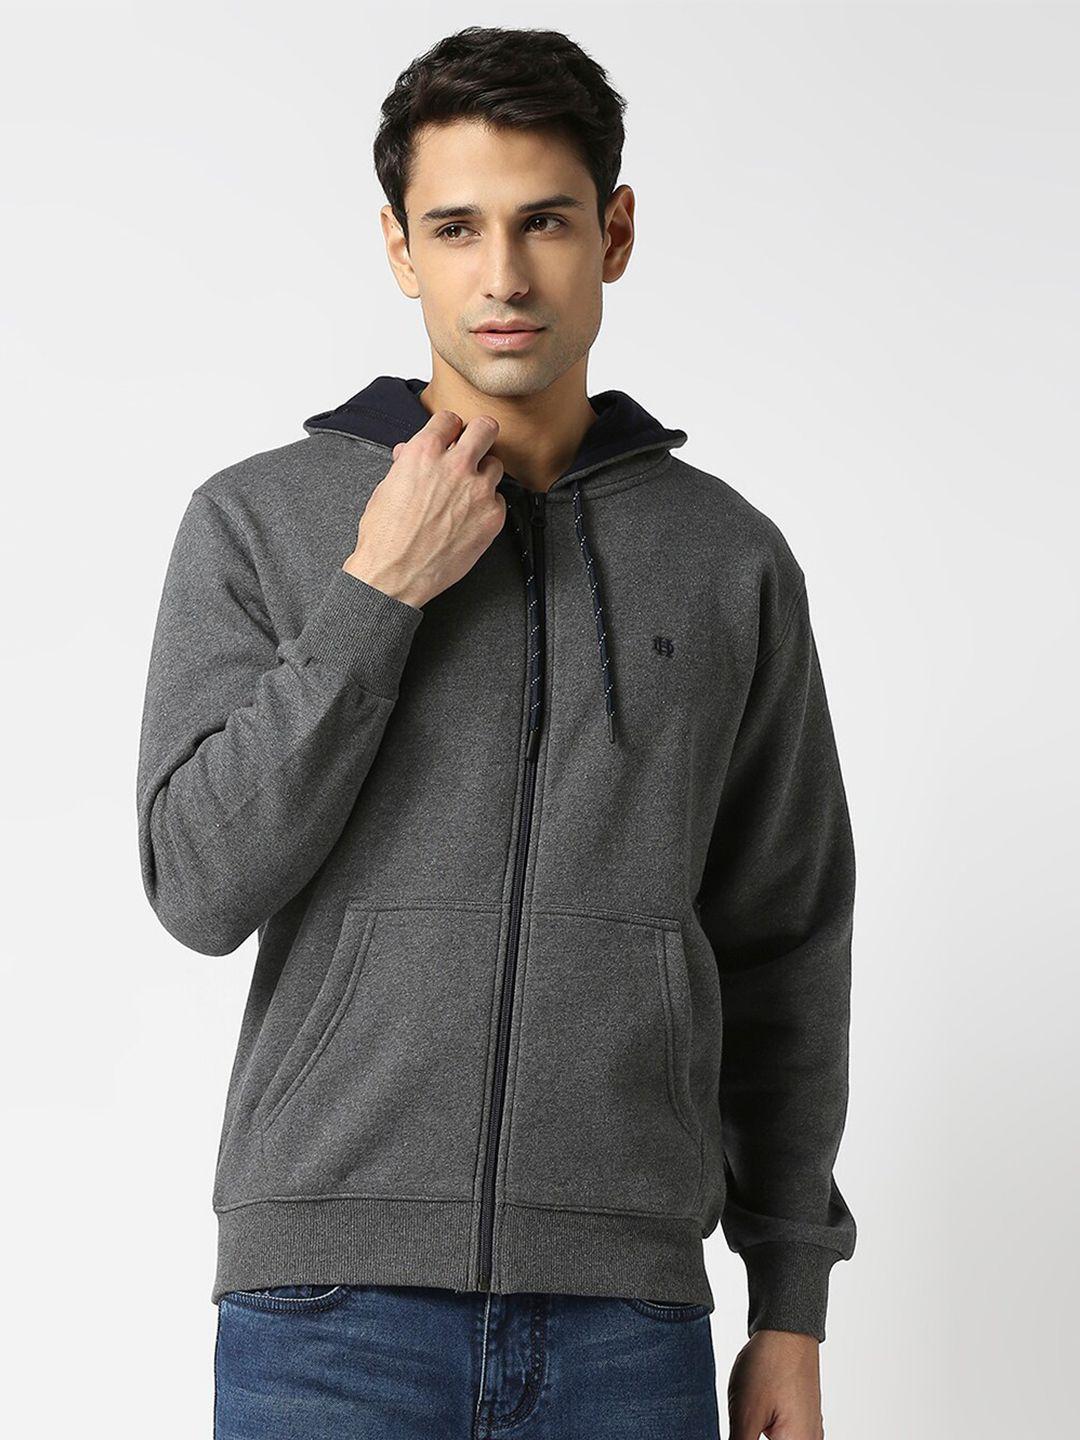 dragon hill front -open hooded sweatshirt